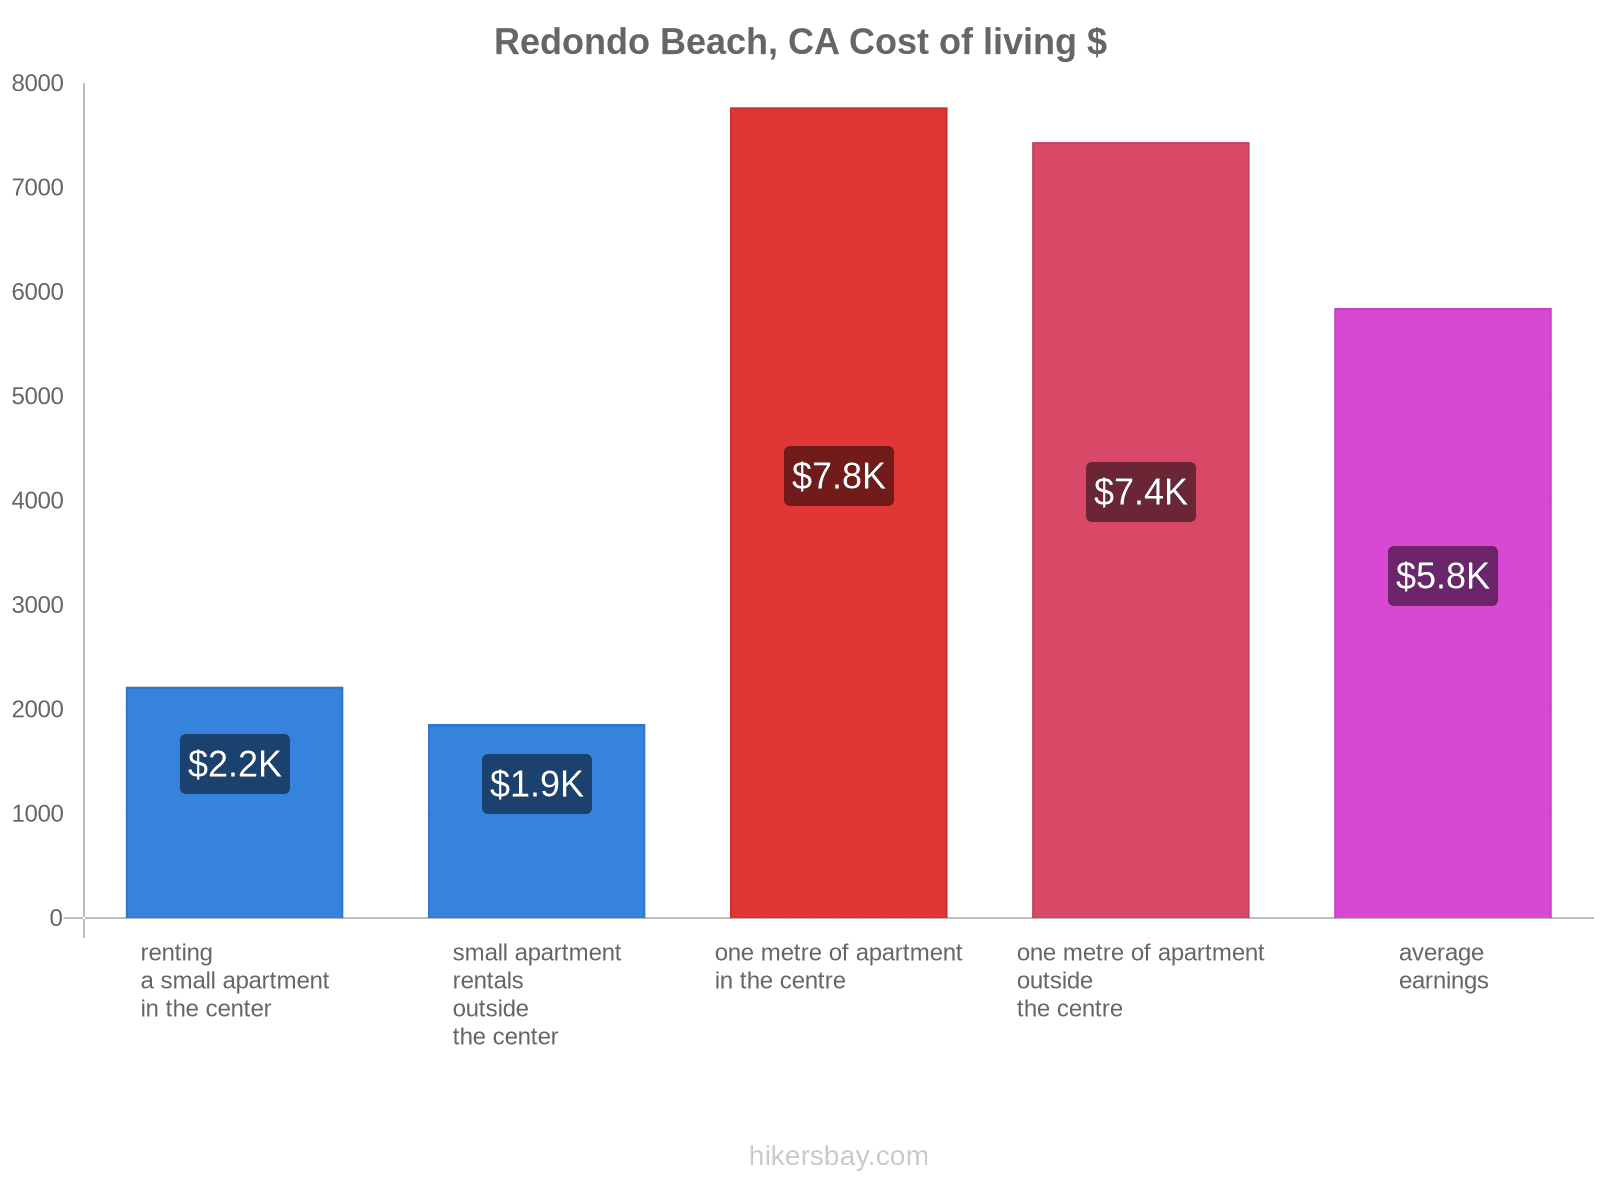 Redondo Beach, CA cost of living hikersbay.com